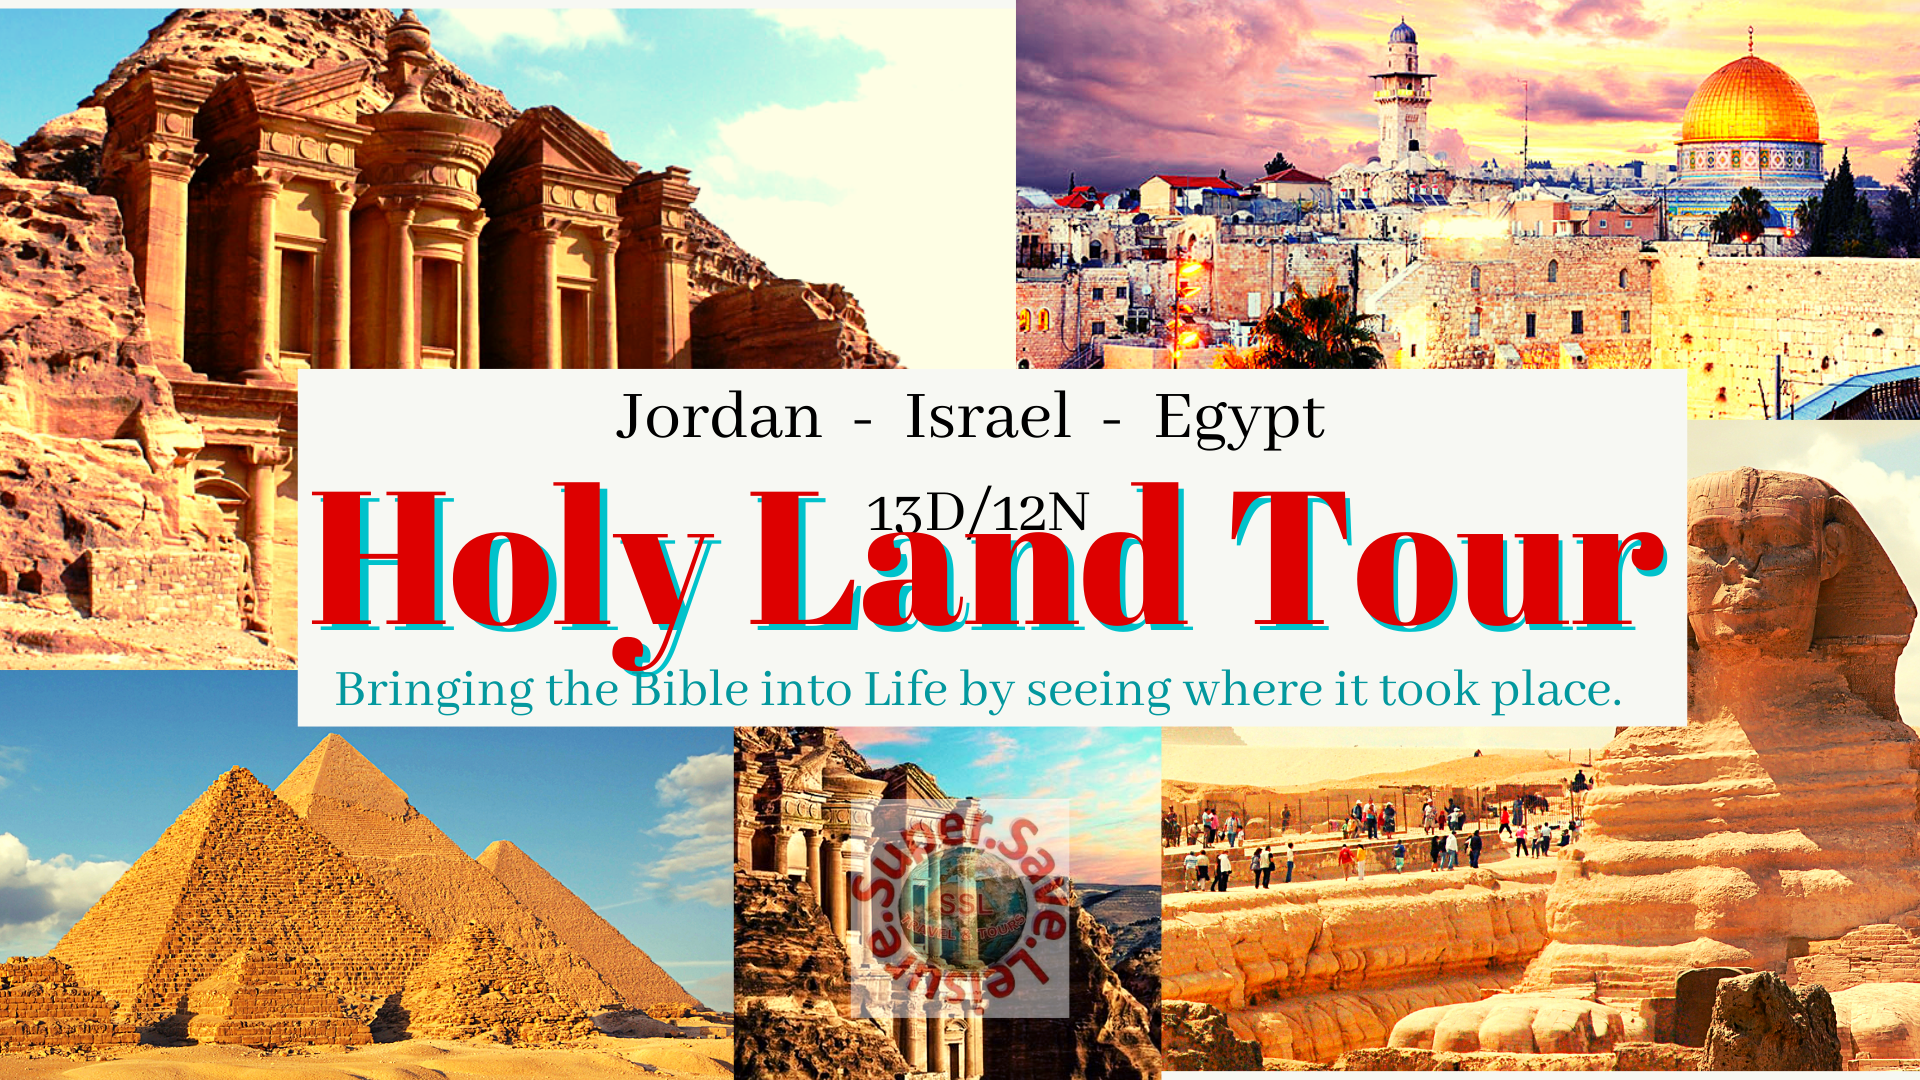 14D/13N HOLY LAND TOUR EGYPT-ISRAEL-JORDAN